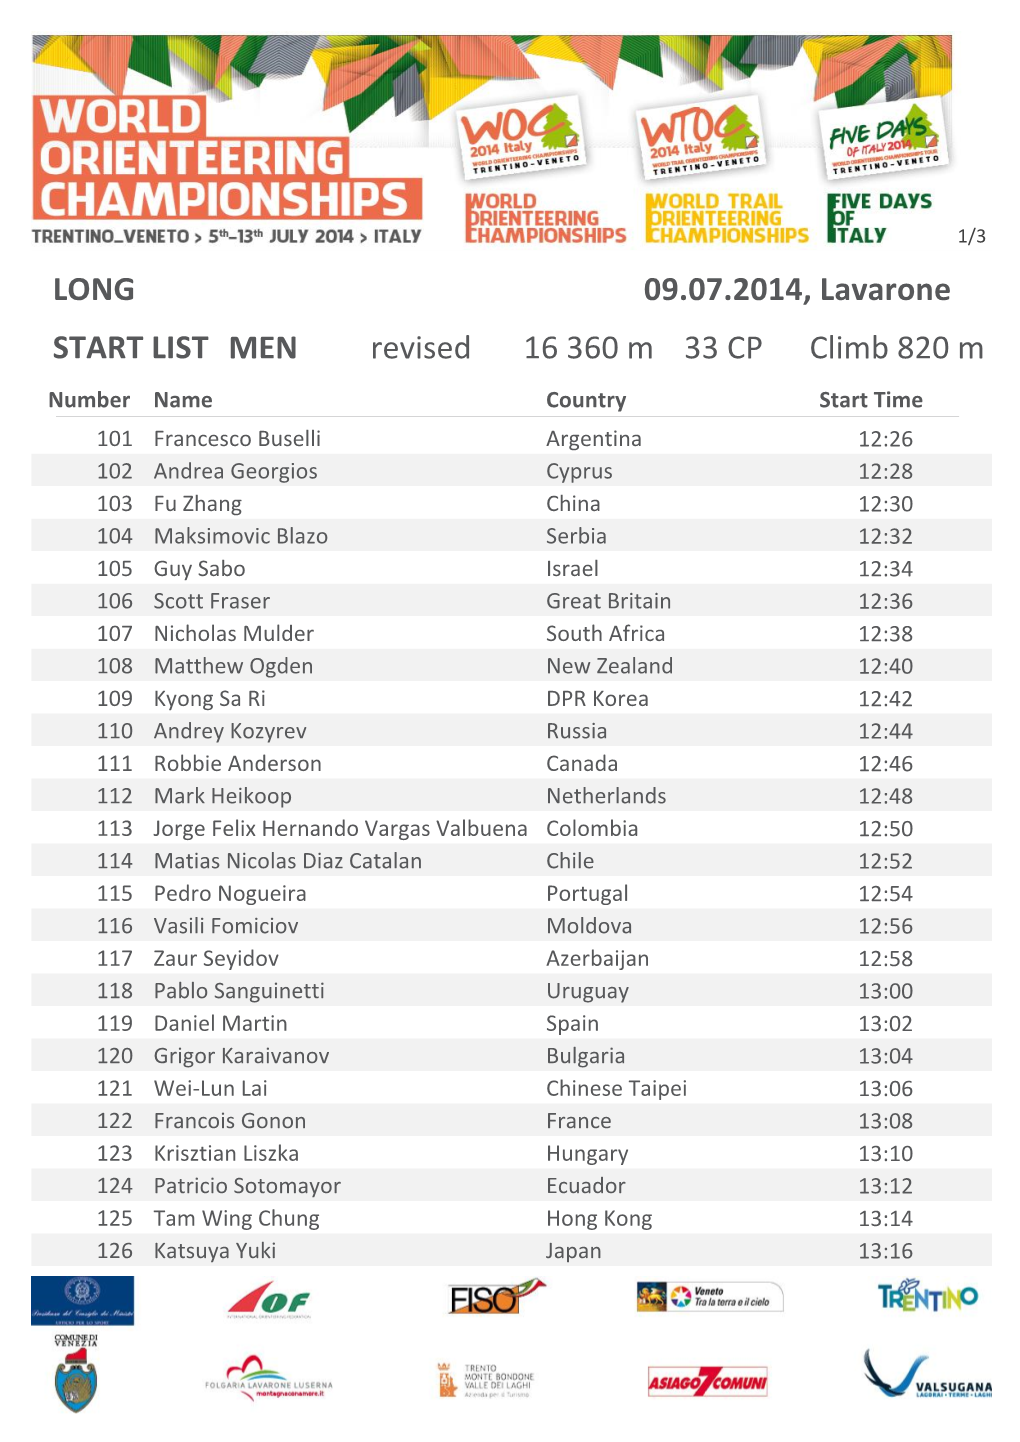 START LIST LONG 09.07.2014, Lavarone 16 360 M 33 CP Climb